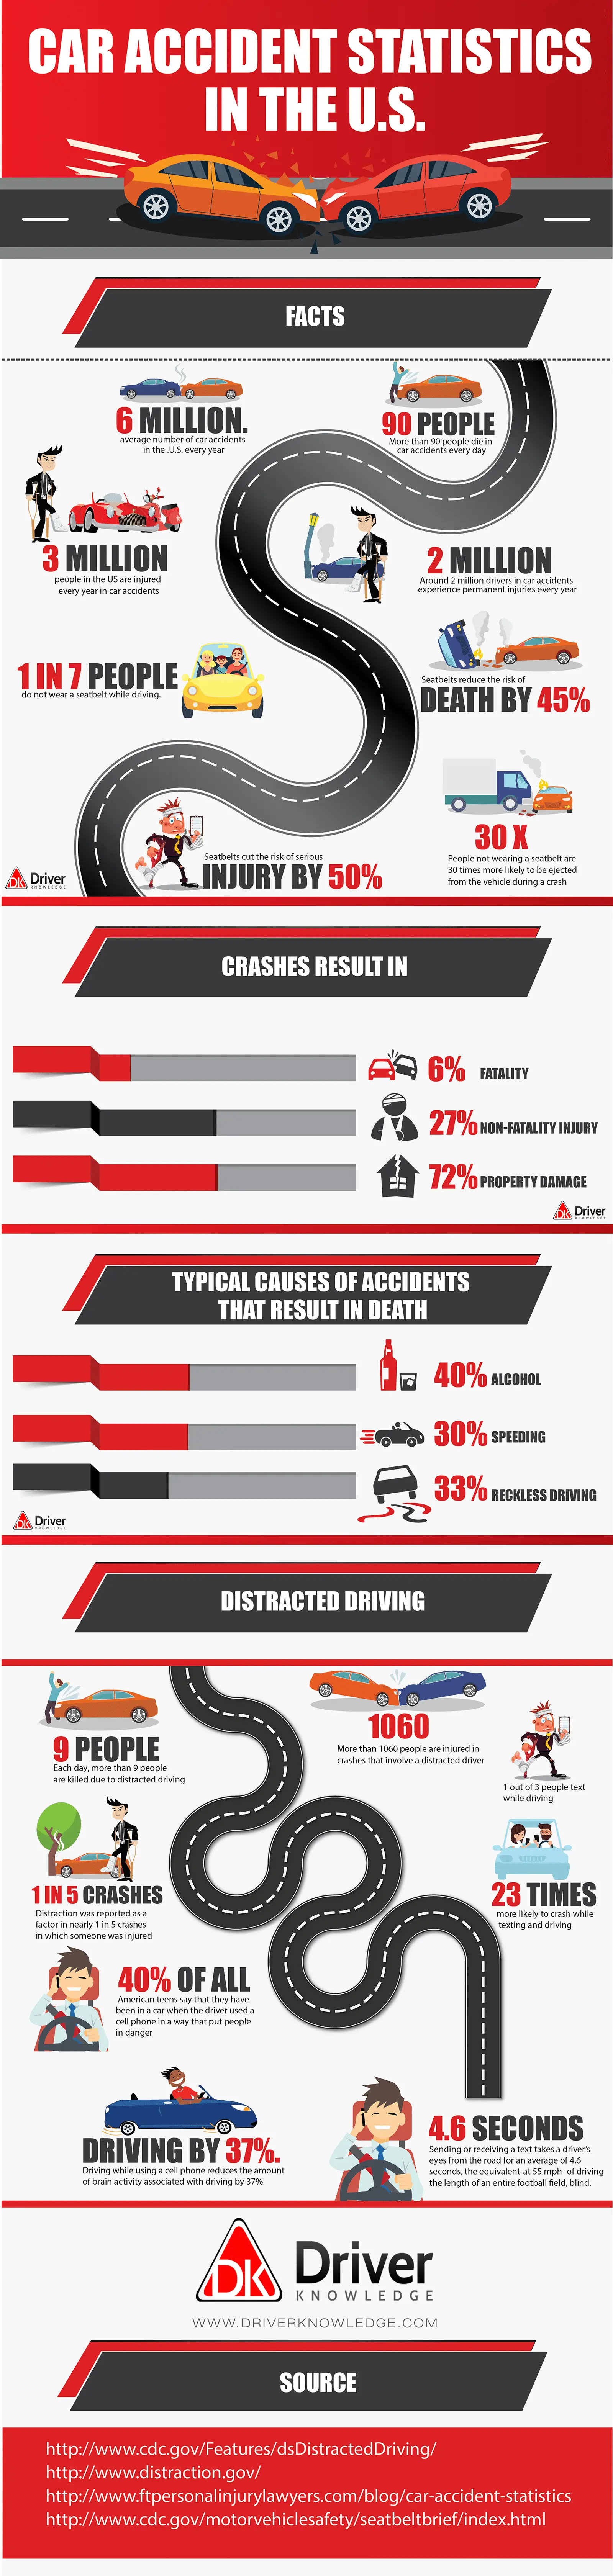 car accident statistics in the u.s. | driverknowledge